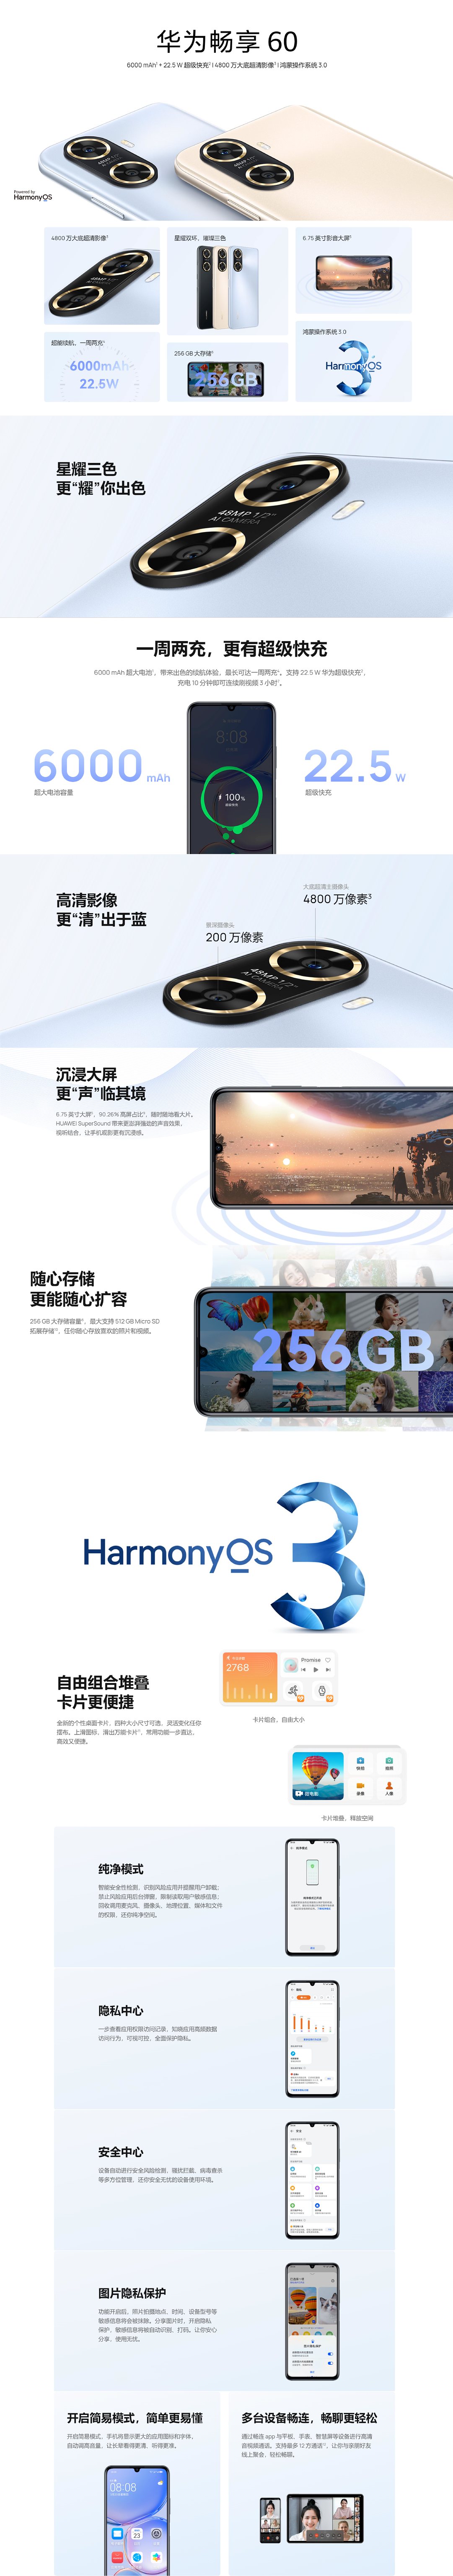 Huawei暢享60 HarmonyOS 3 4G LTE